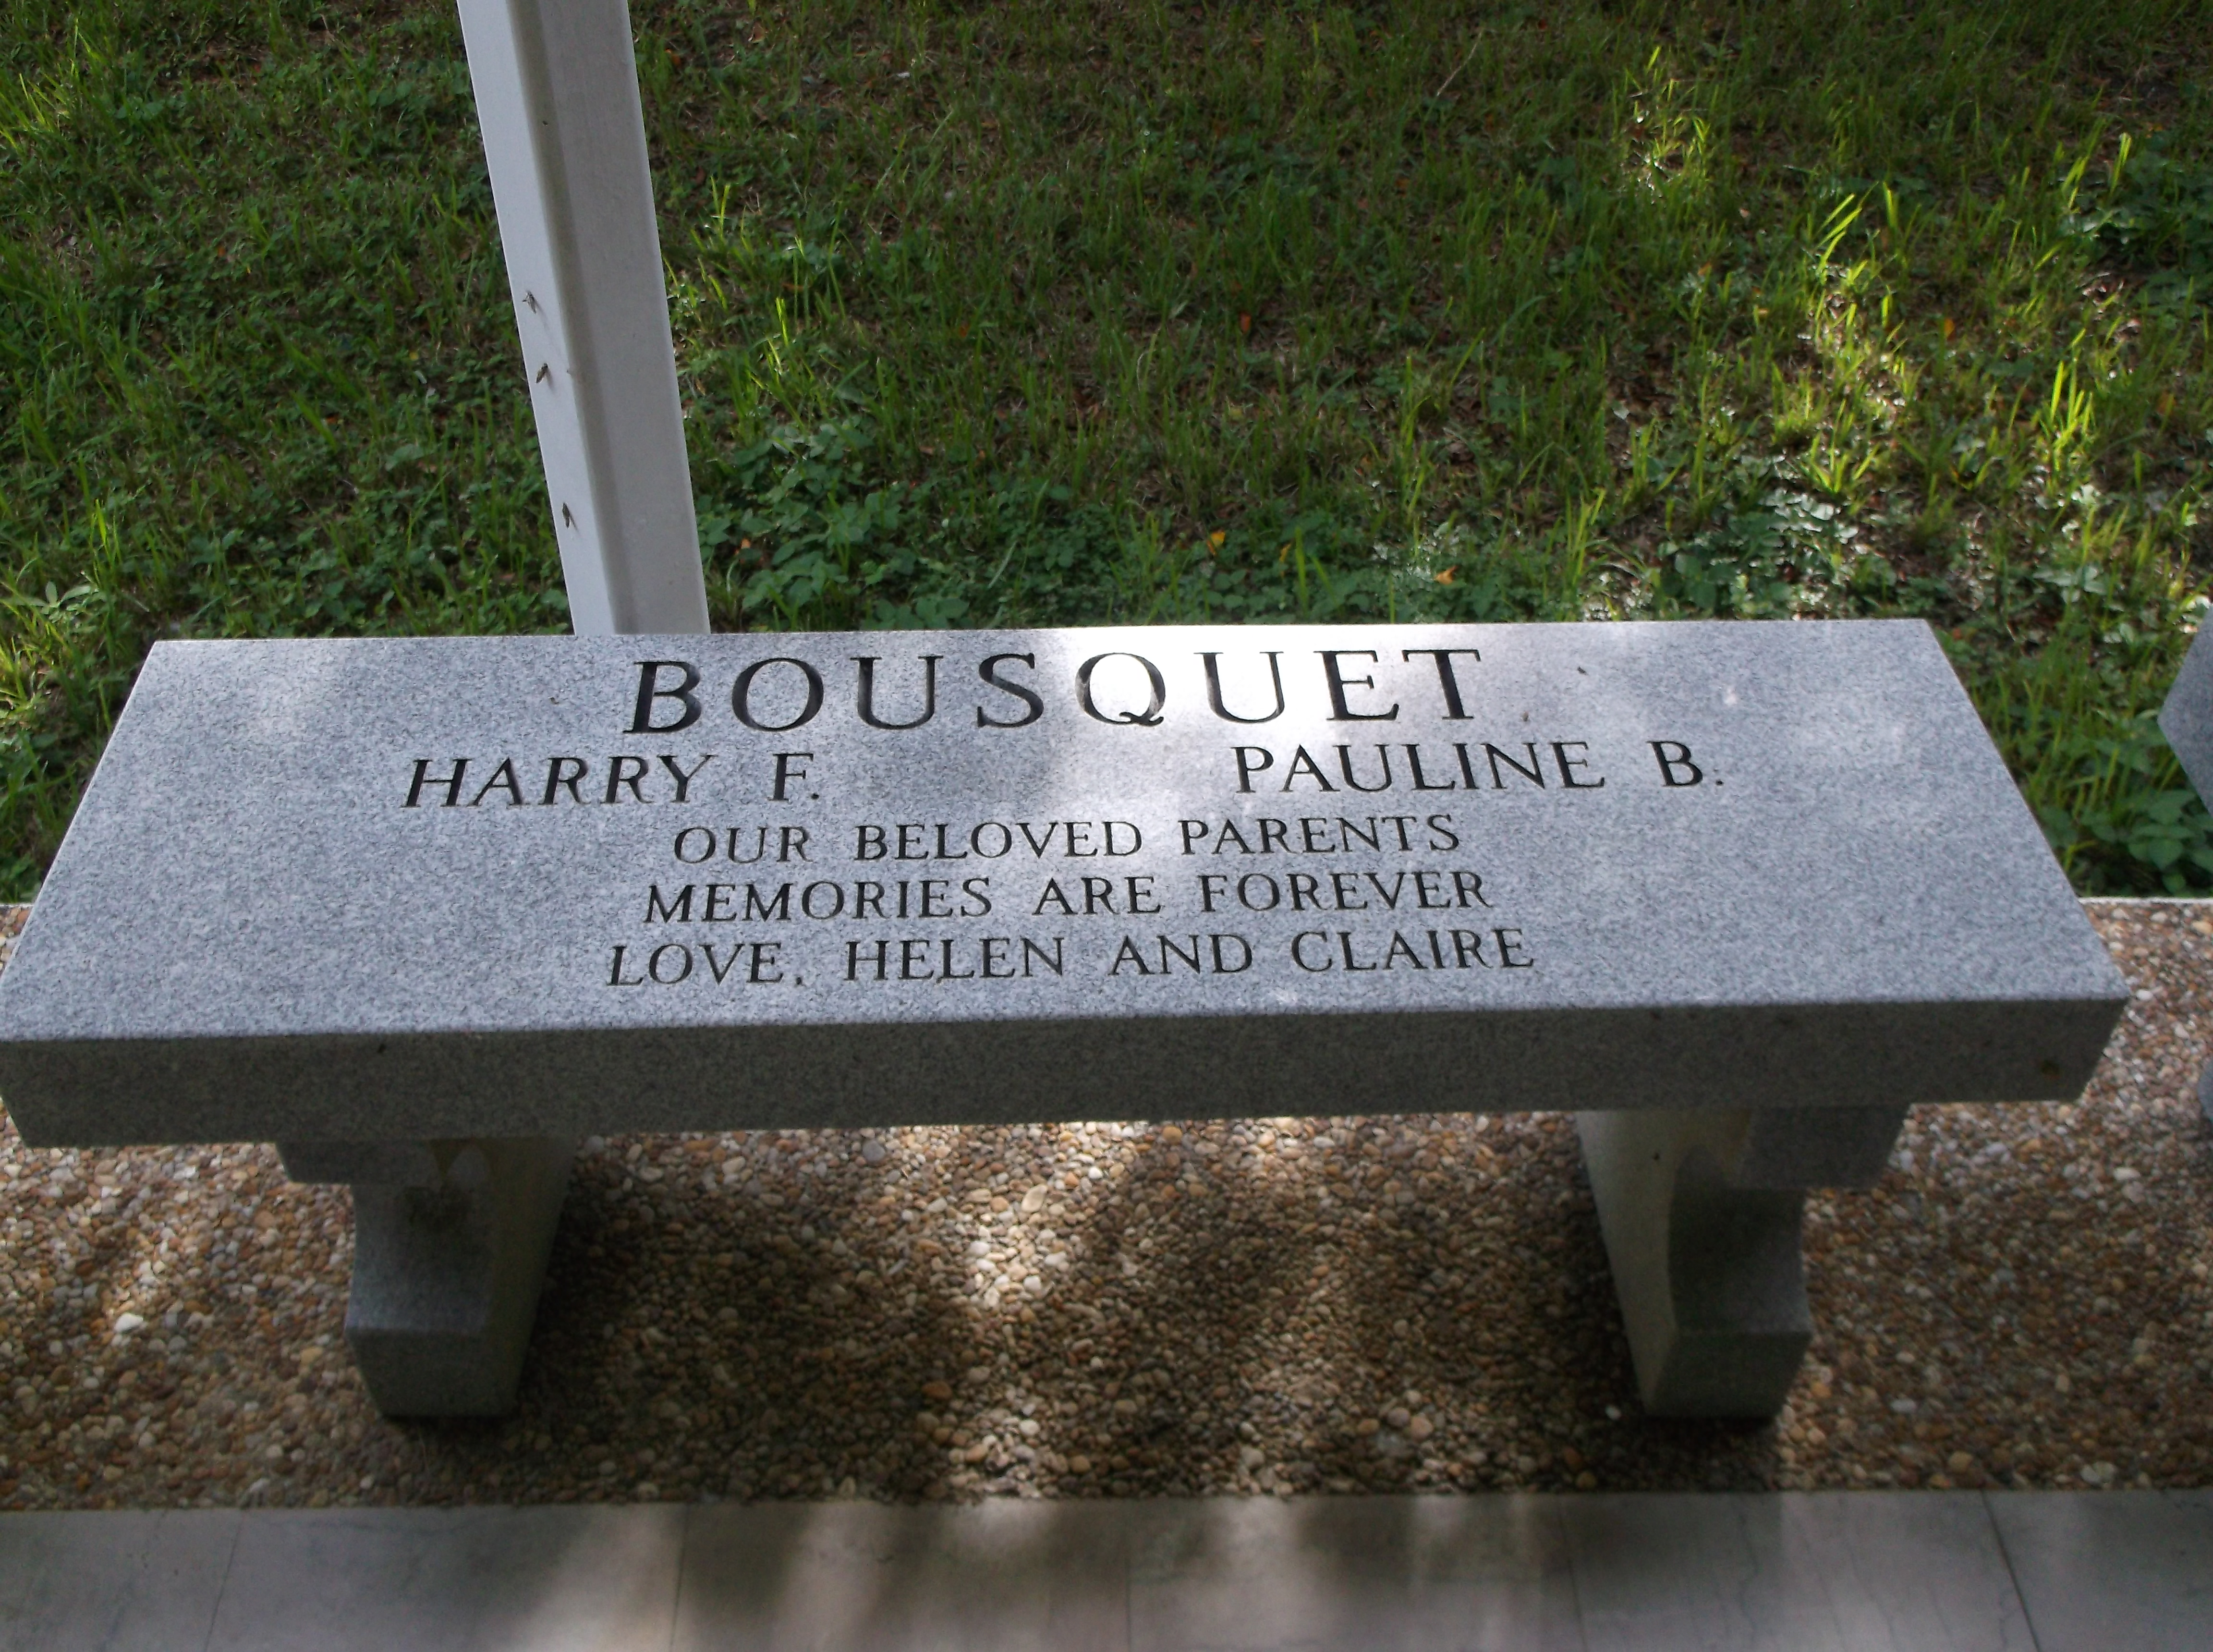 Harry F Bousquet